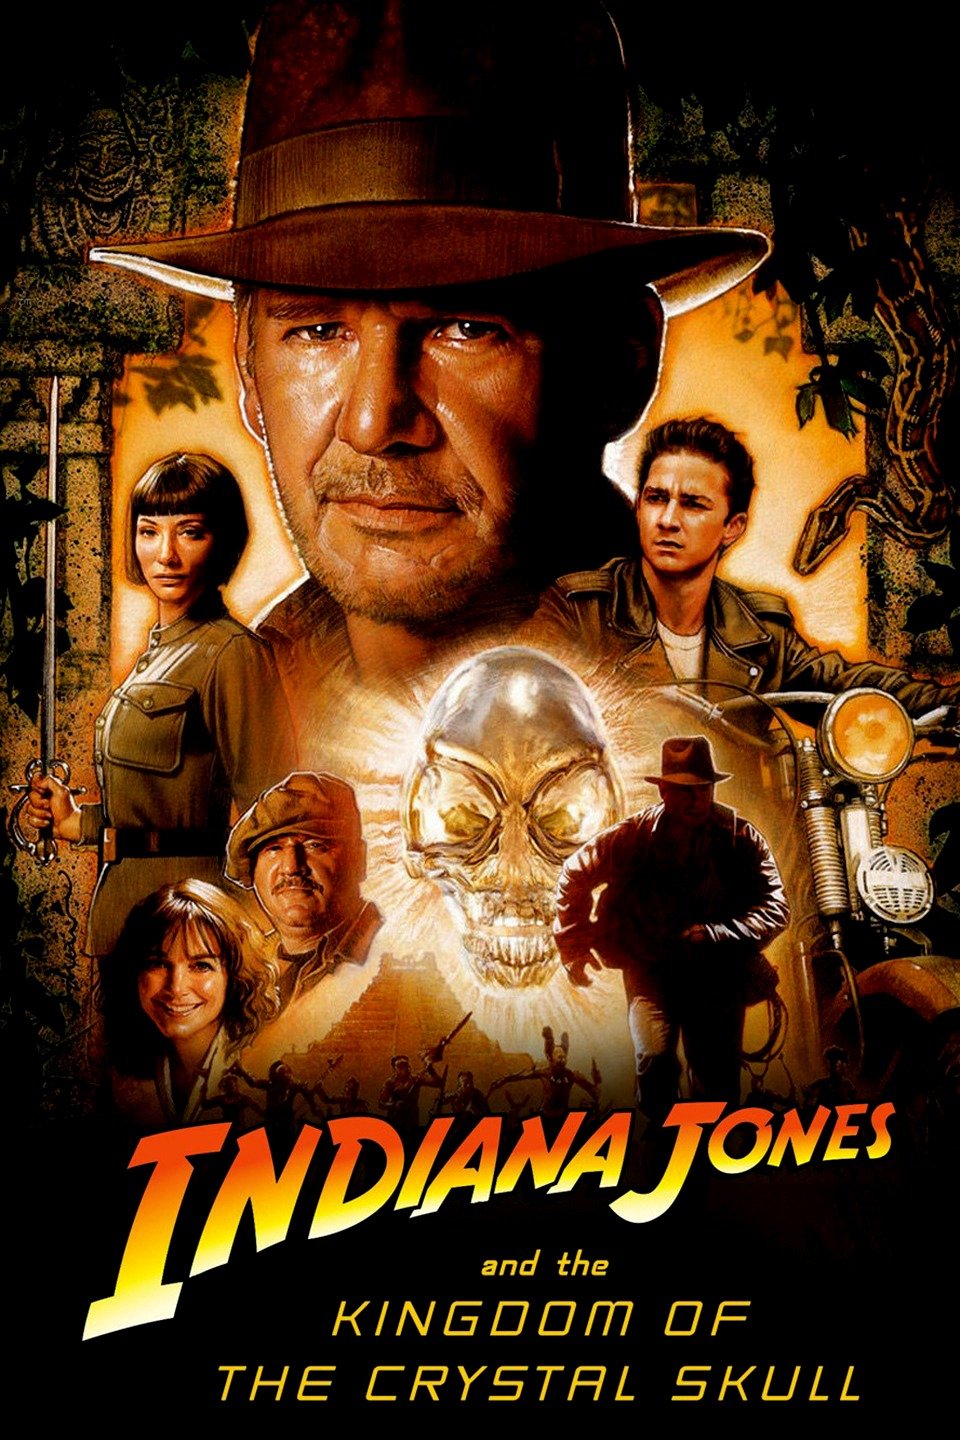 [MINI Super-HQ] Indiana Jones  And The Kingdom of the Crystal Skull (2008) ขุมทรัพย์สุดขอบฟ้า อาณาจักรกะโหลกแก้ว ภาค 4 [1080p] [พากย์ไทย 5.1 + อังกฤษ DTS] [บรรยายไทย + อังกฤษ] [เสียงไทย + ซับไทย] [ONE2UP]